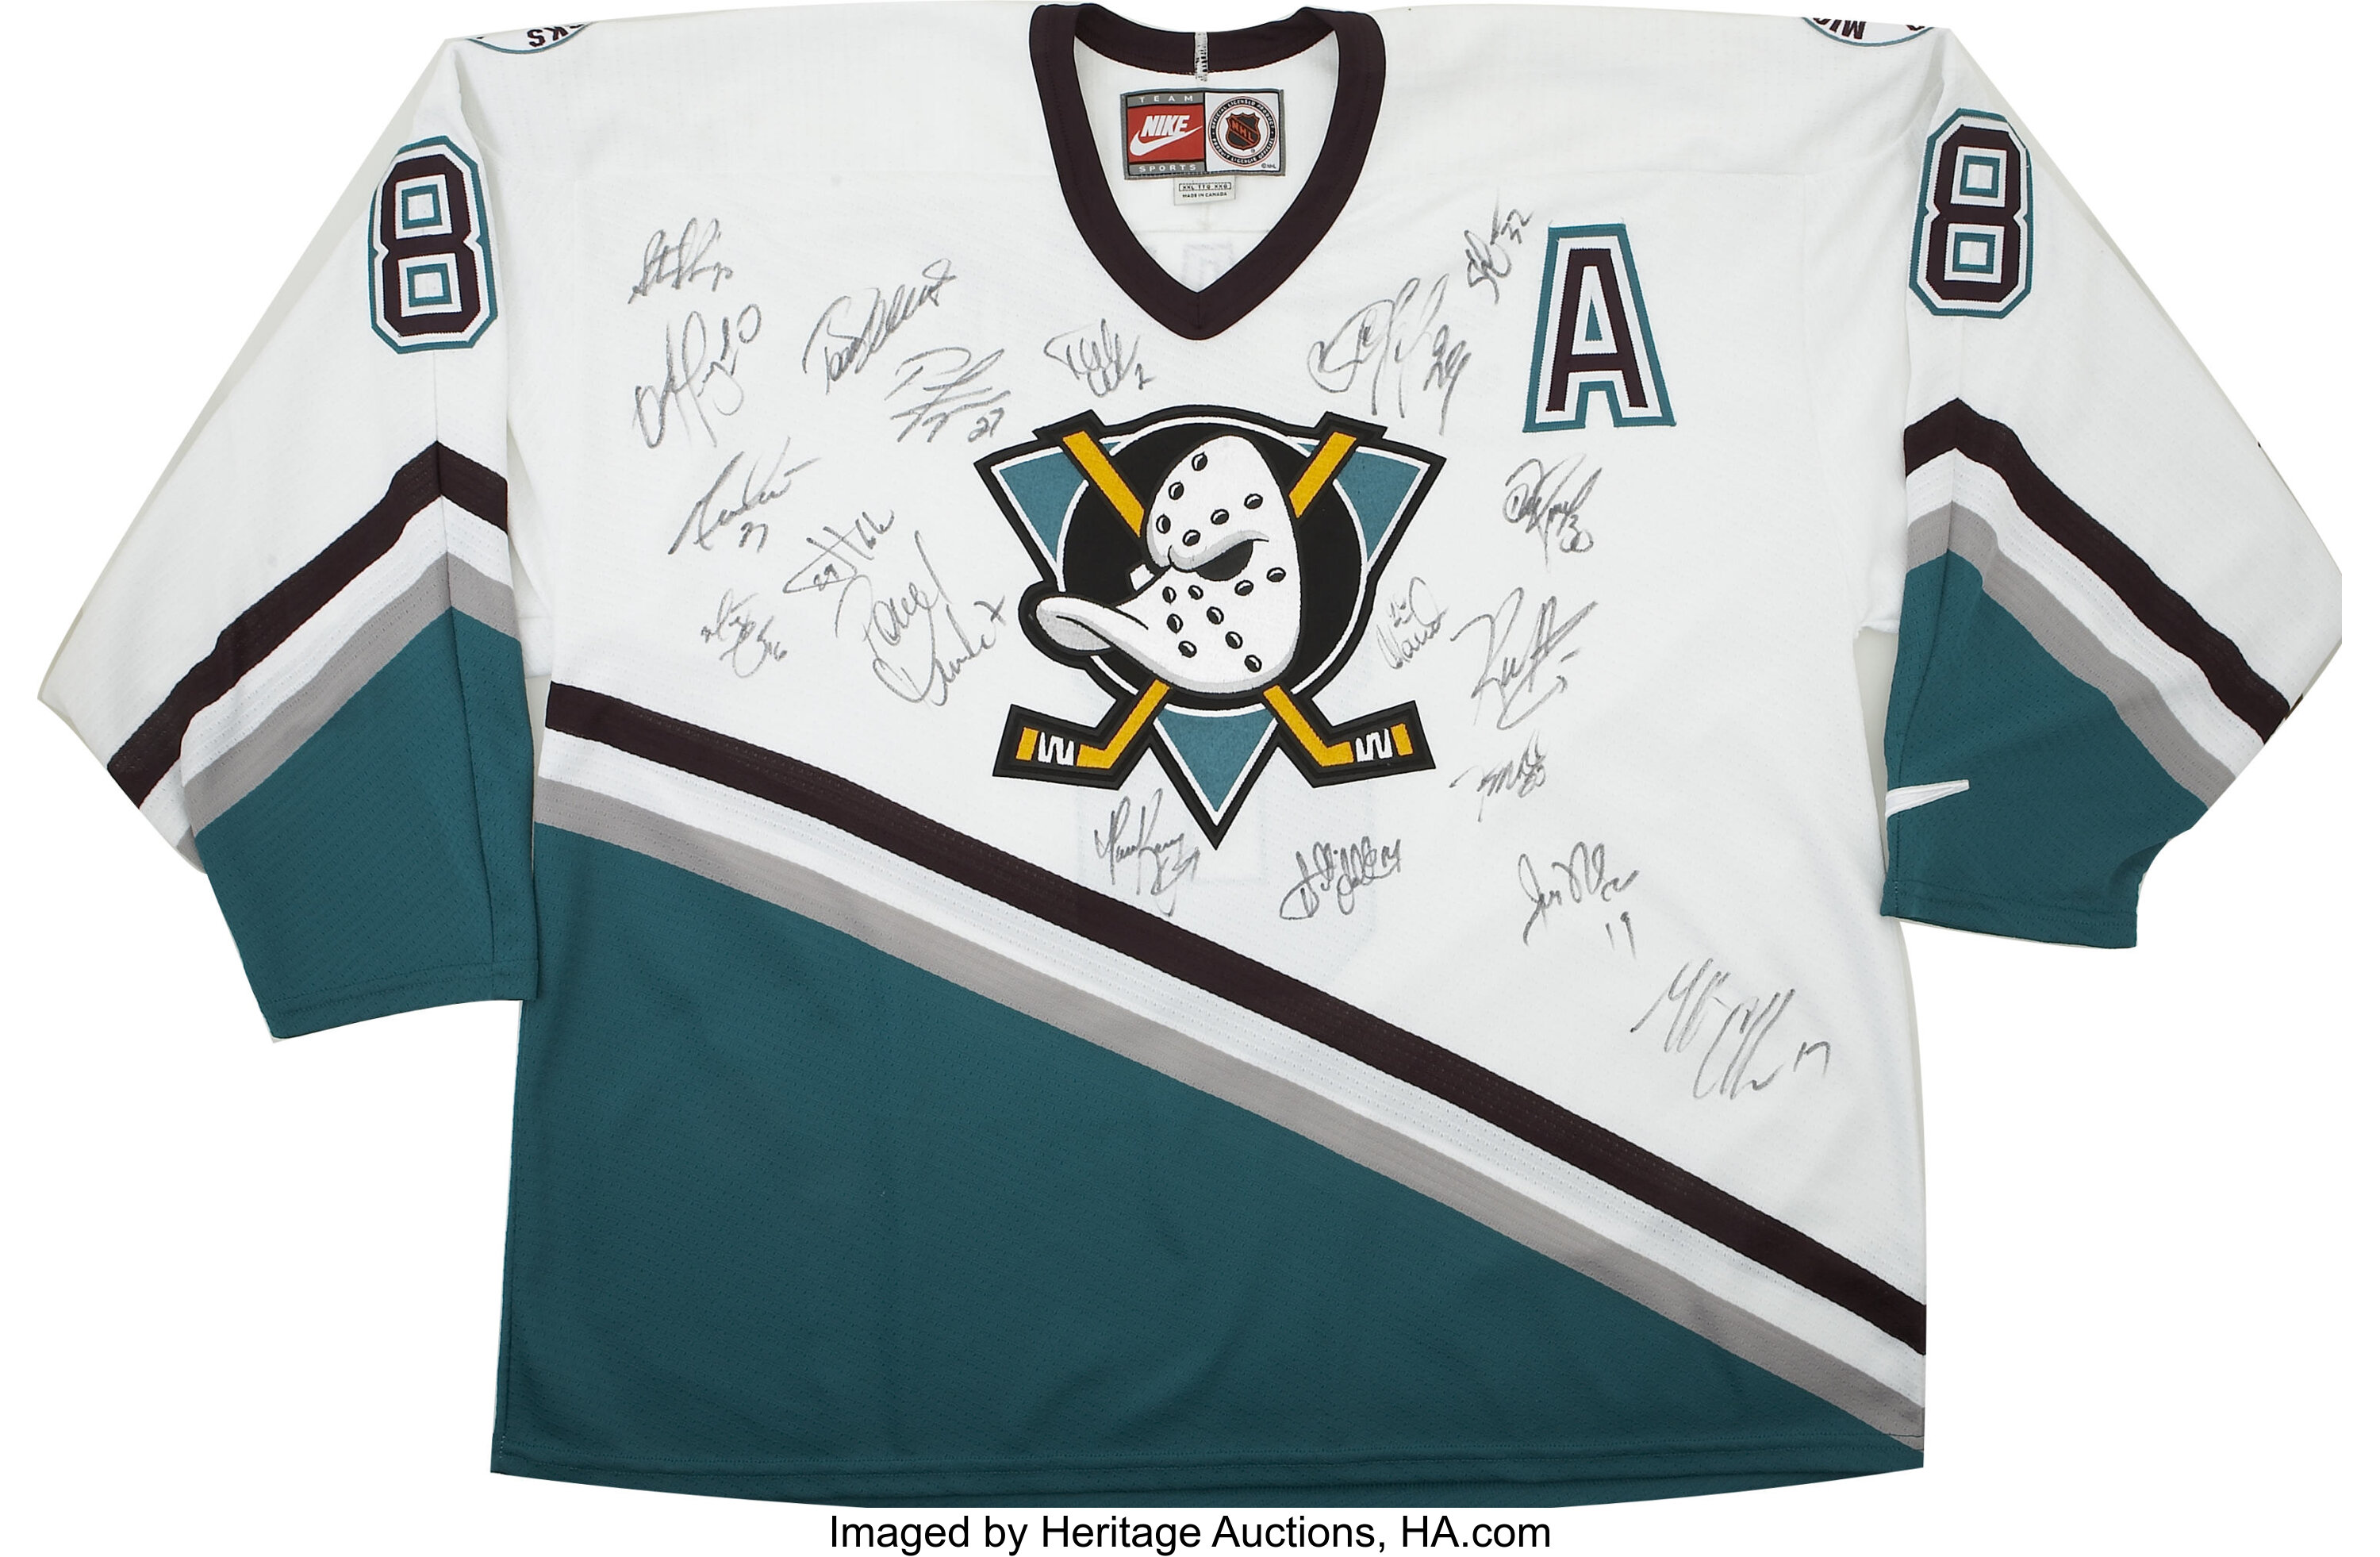 1999-00 BAP Memorabilia Anaheim Ducks Complete Silver Team Set /1000 (13)